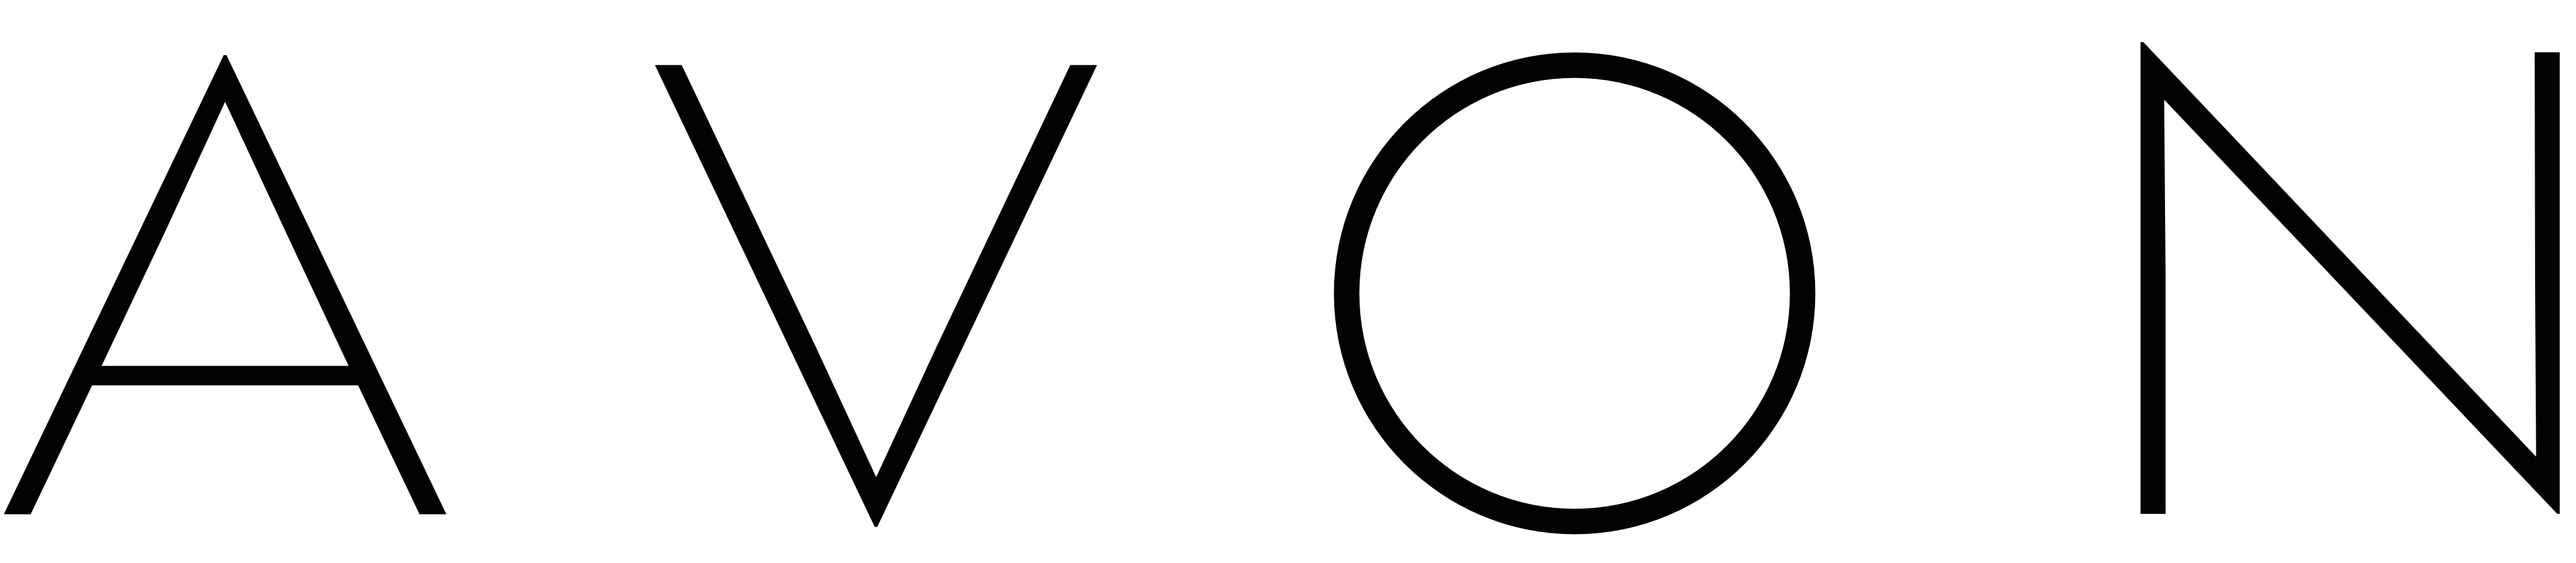 Avon logo, logotype